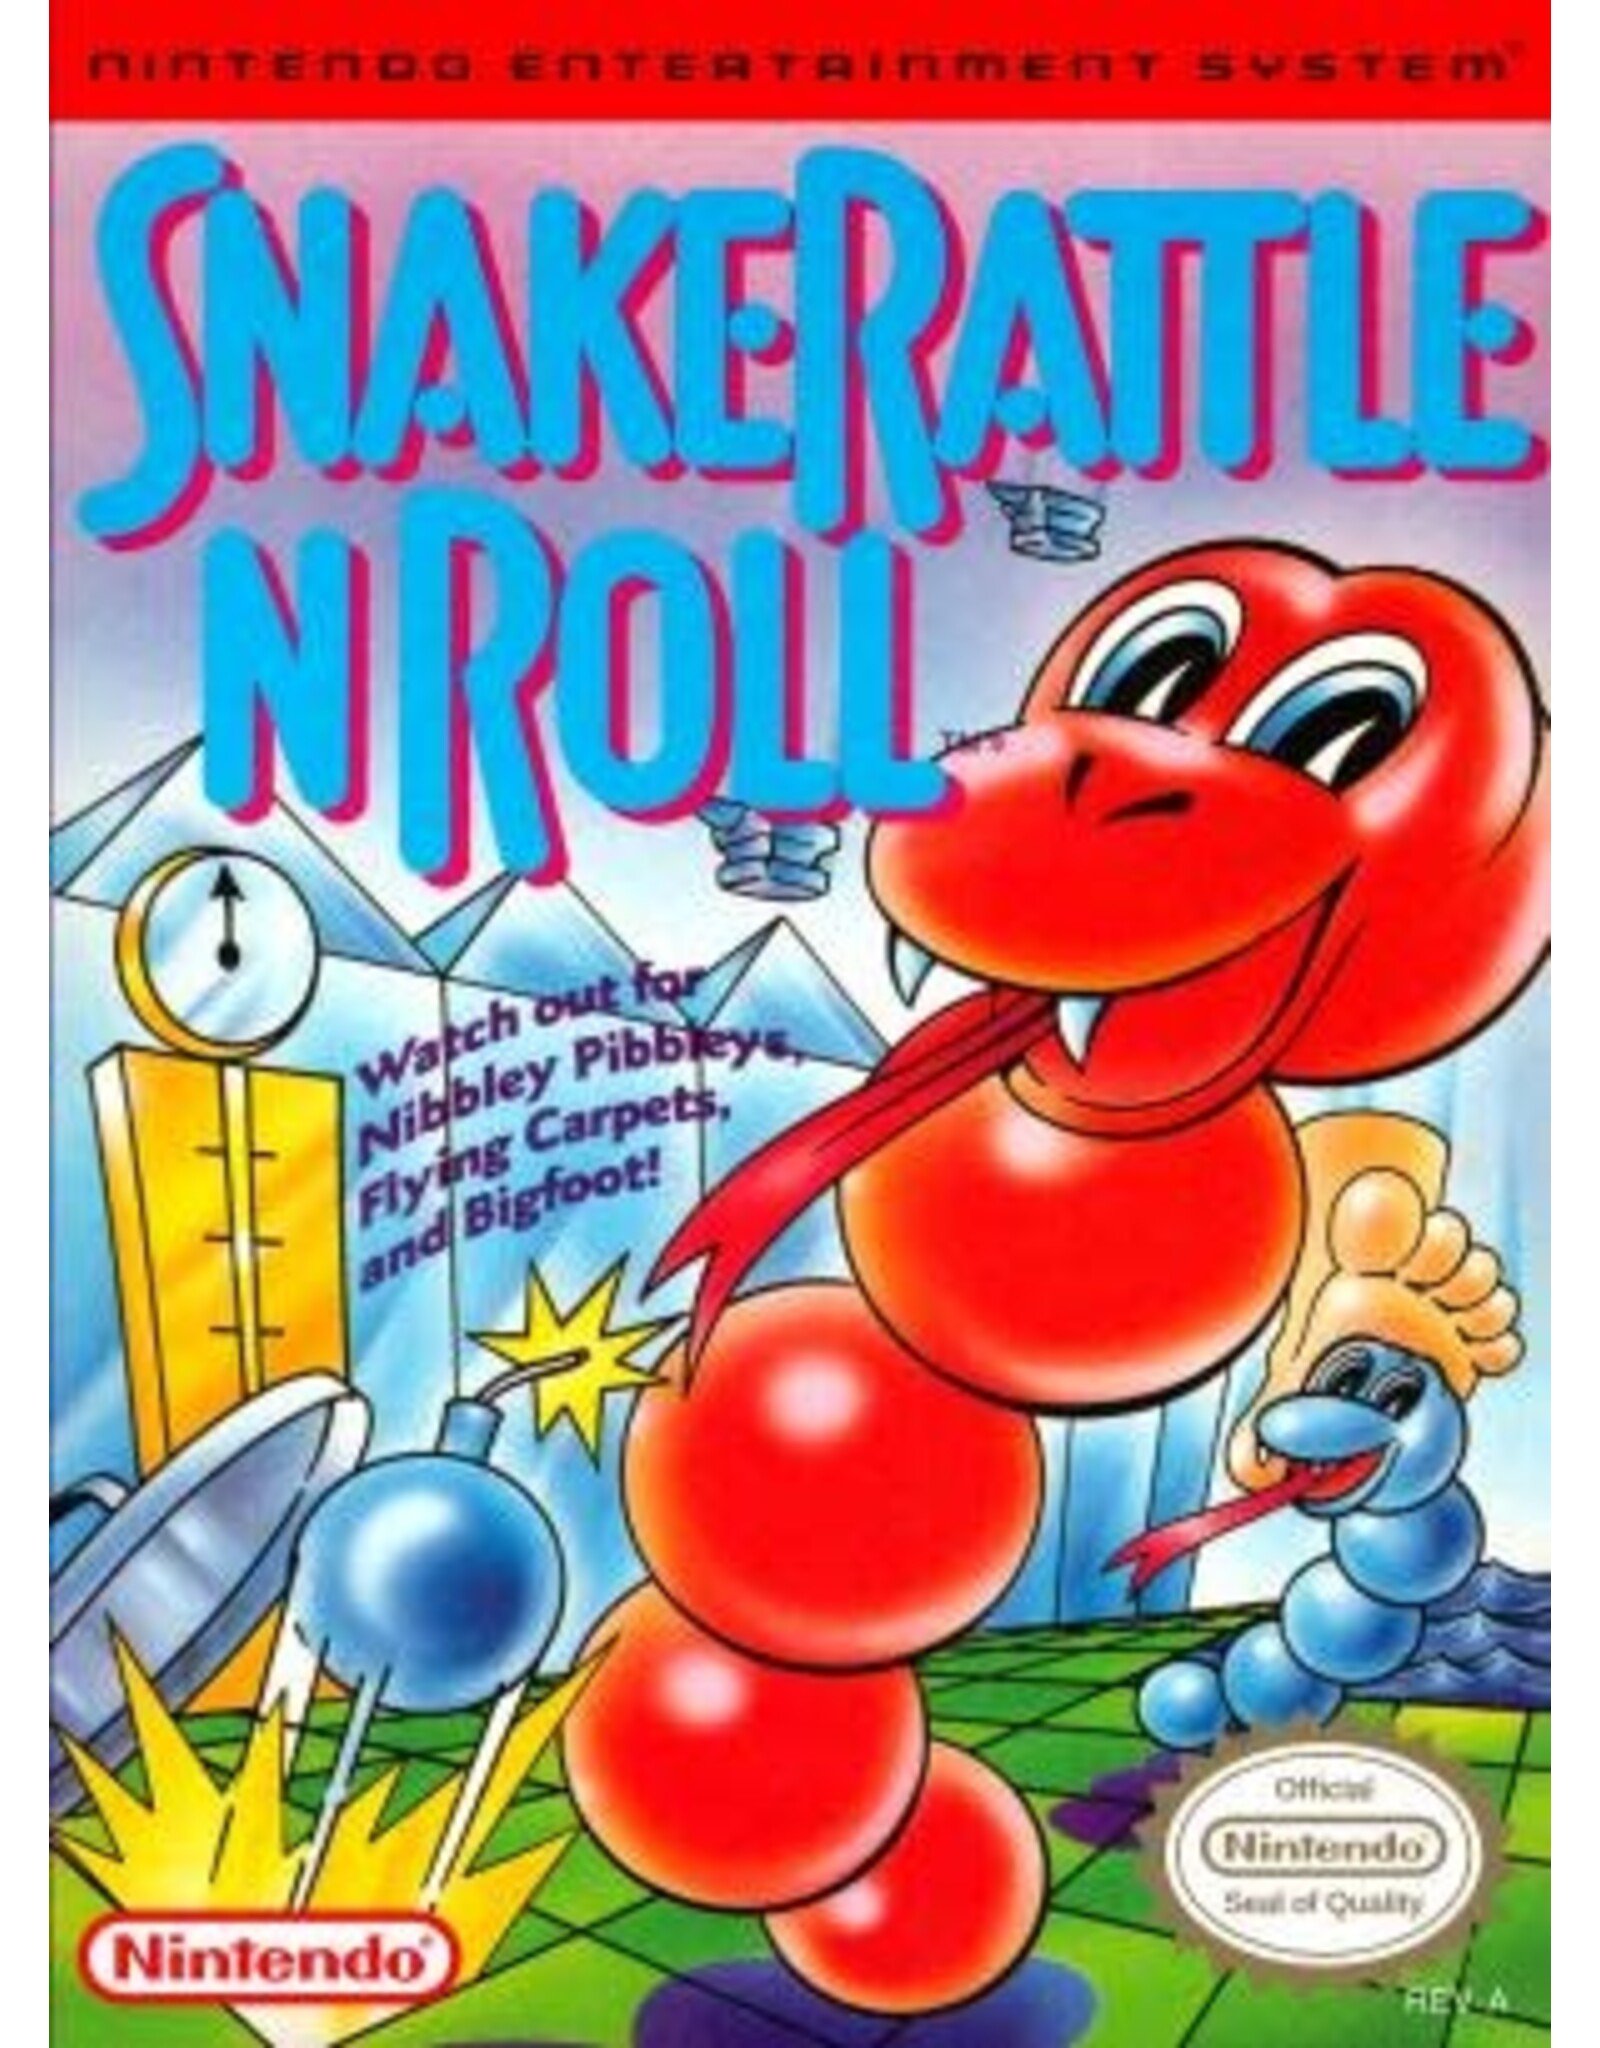 NES Snake Rattle n Roll (Cart Only)